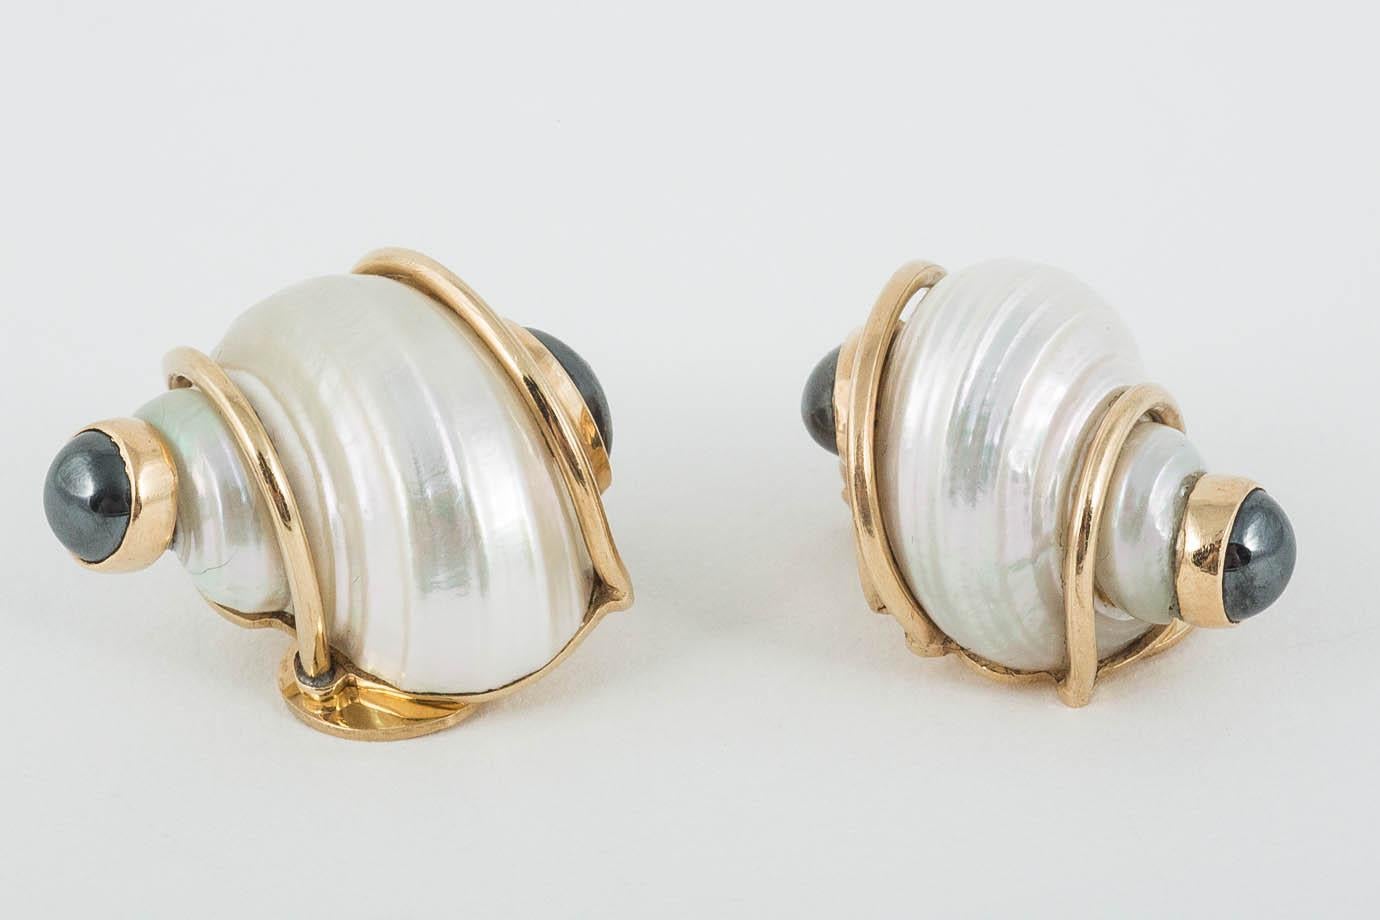 14ct Gold shell shaped earrings by Seaman Schepps